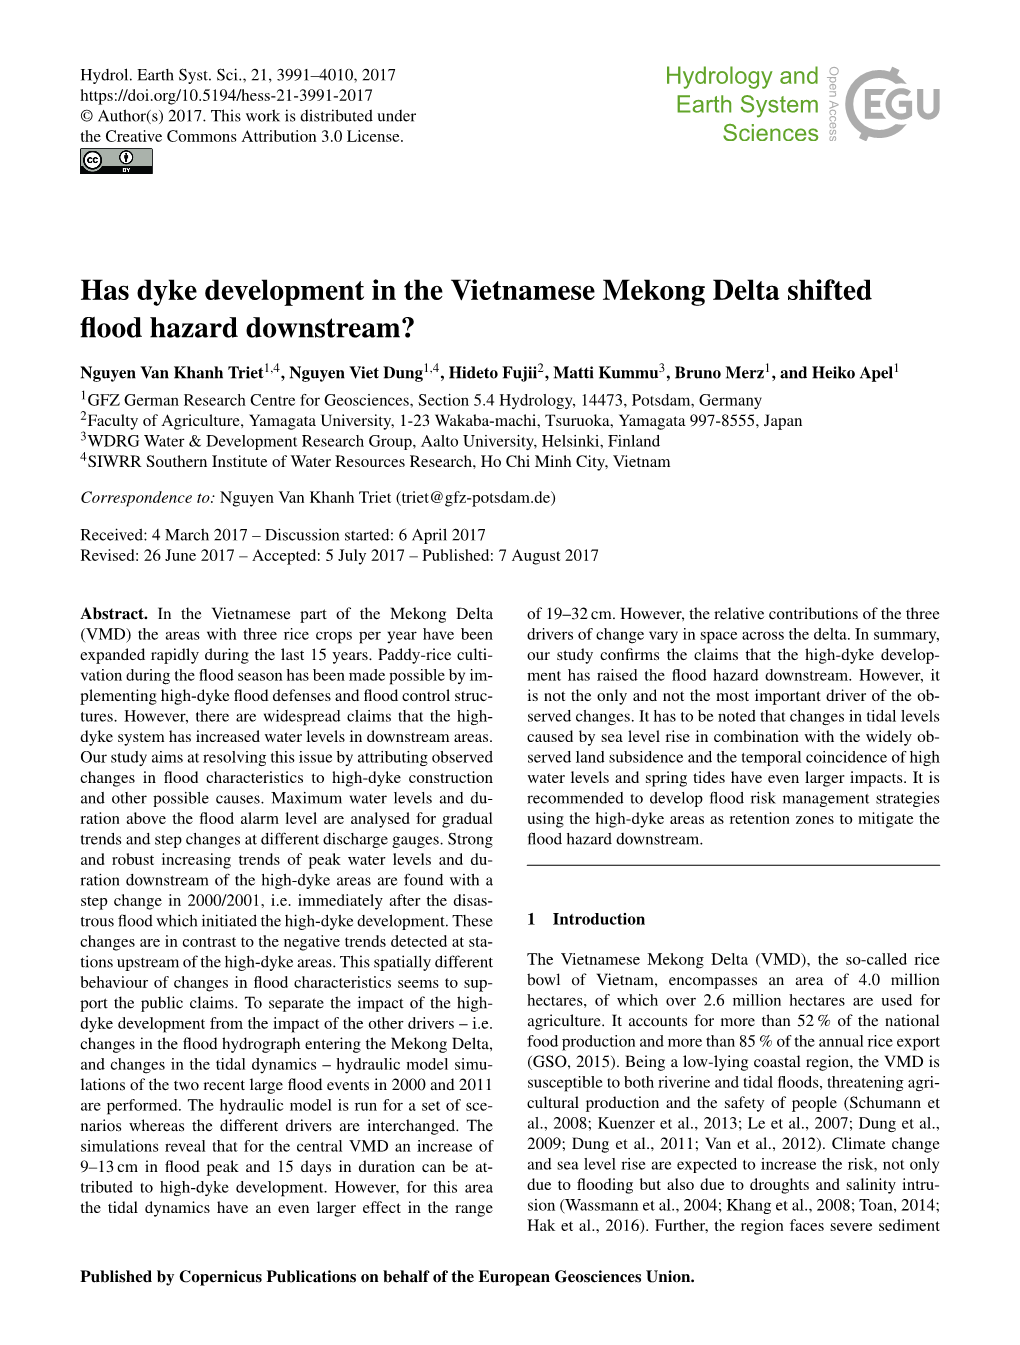 Has Dyke Development in the Vietnamese Mekong Delta Shifted ﬂood Hazard Downstream?